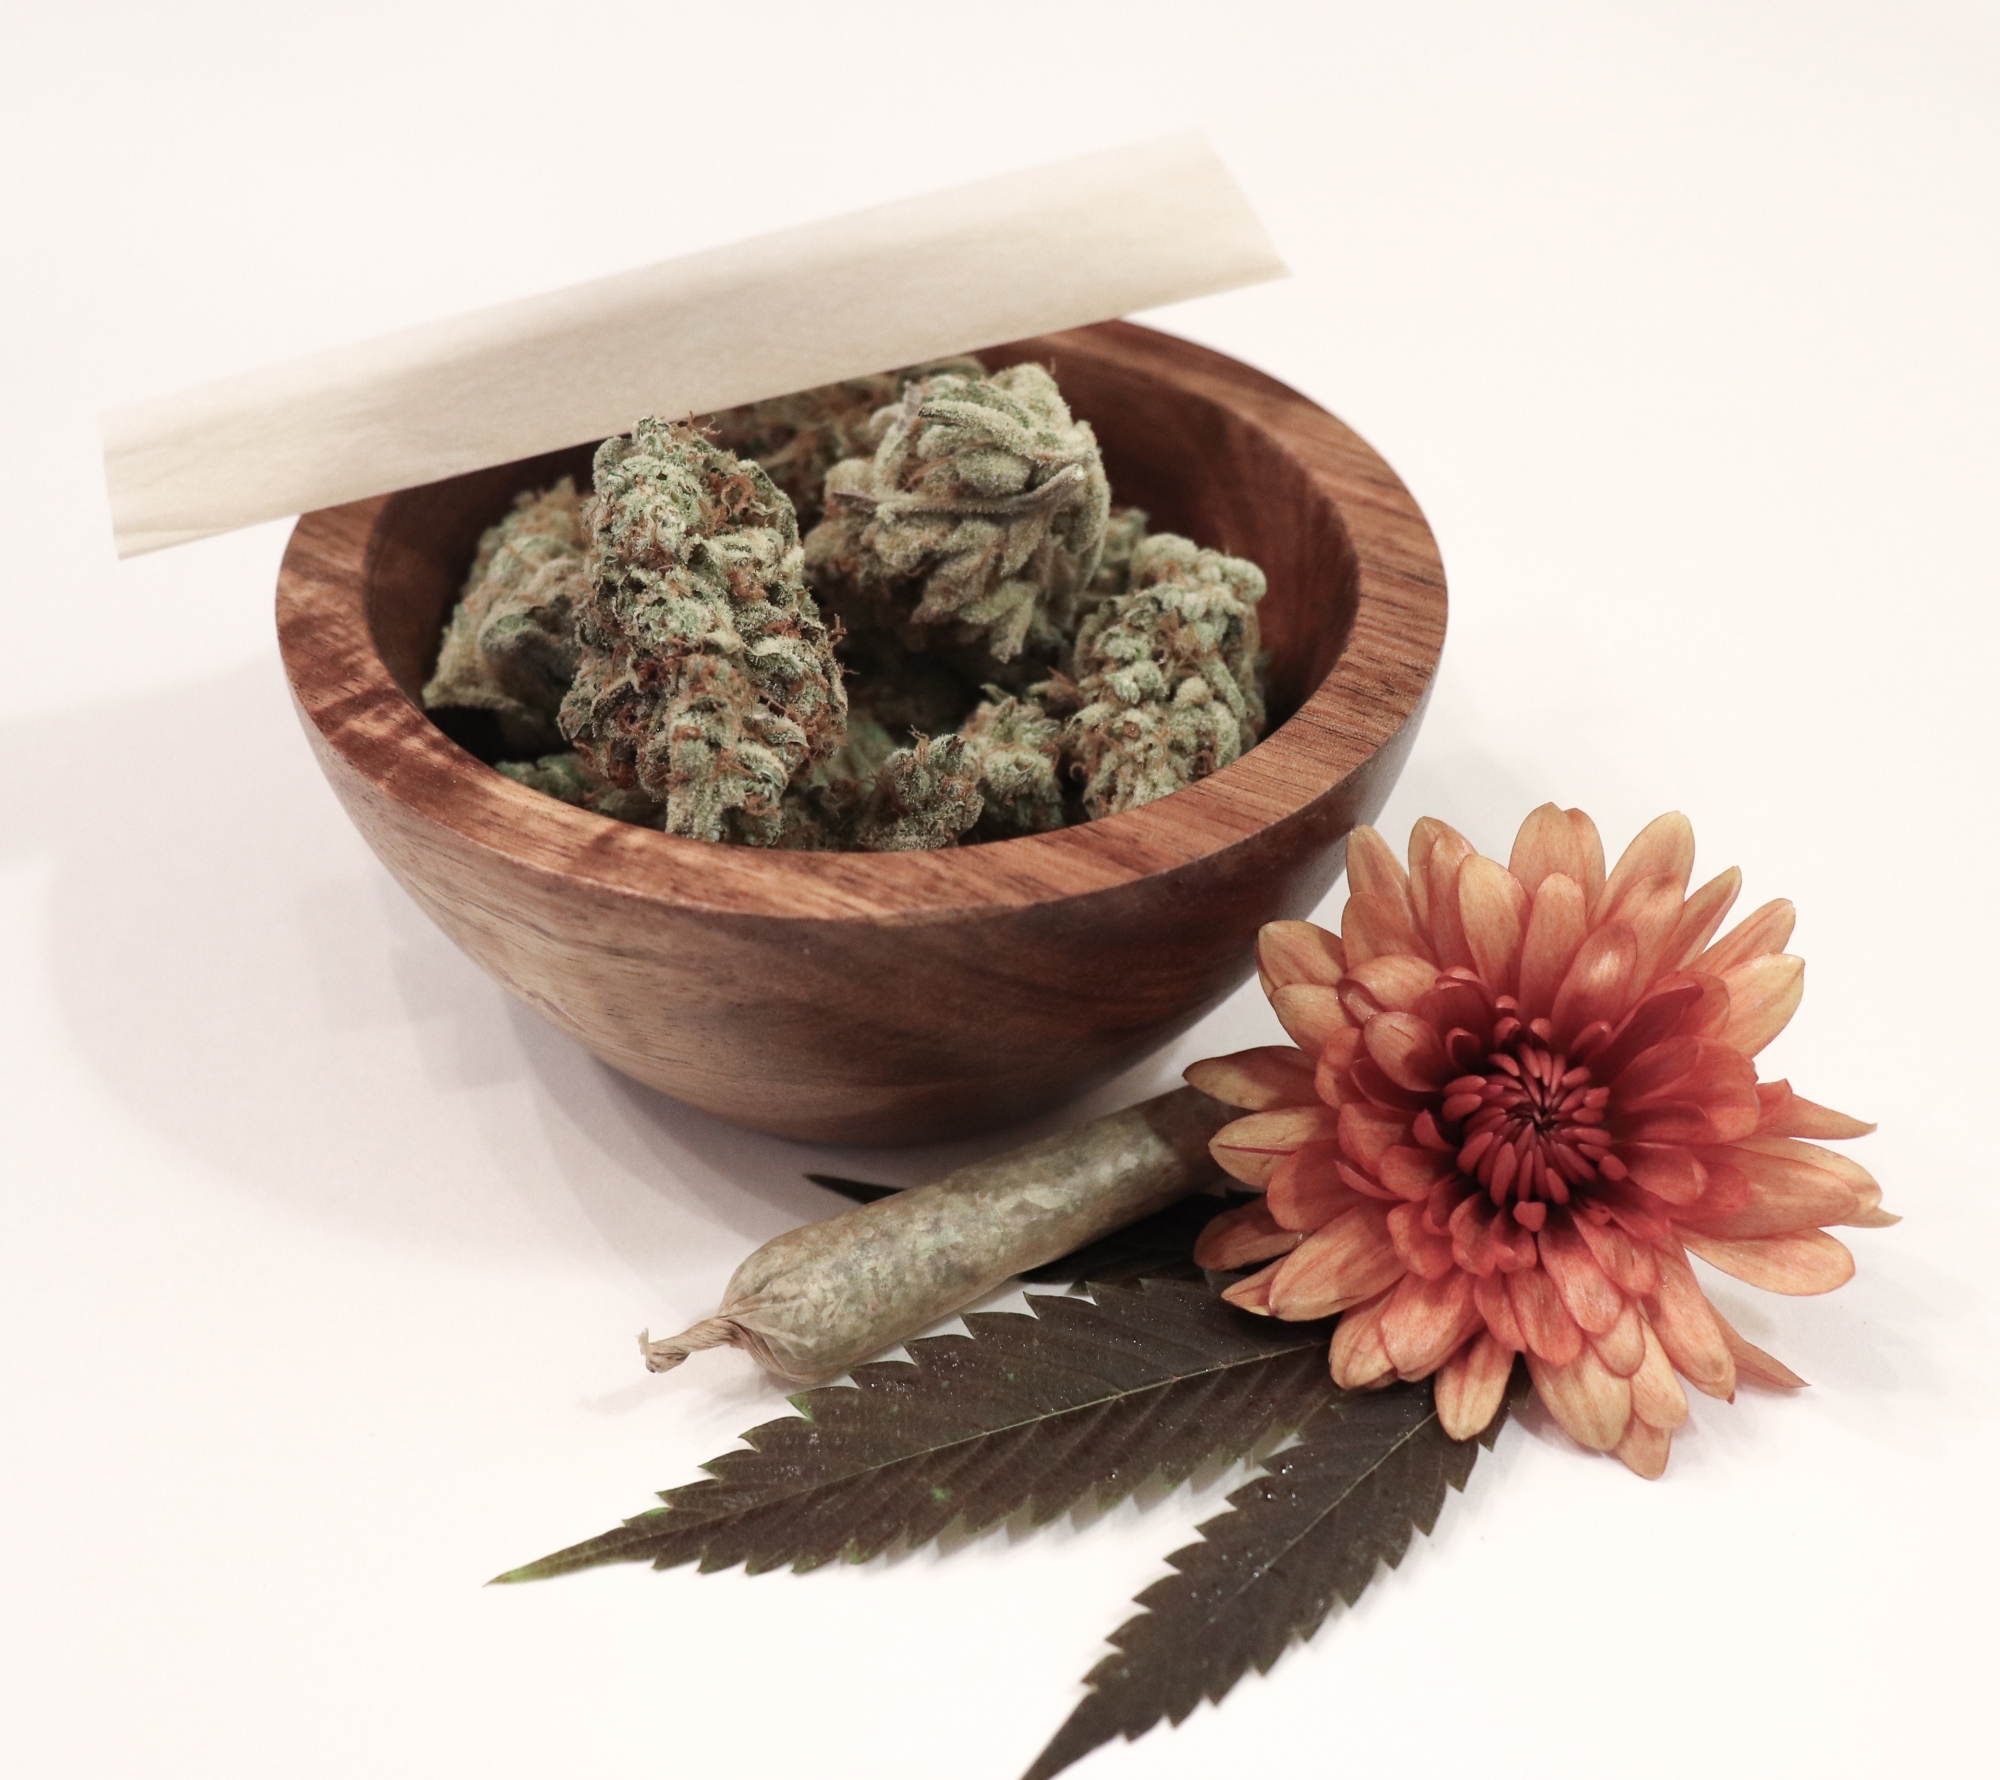 cannabis bud with flower